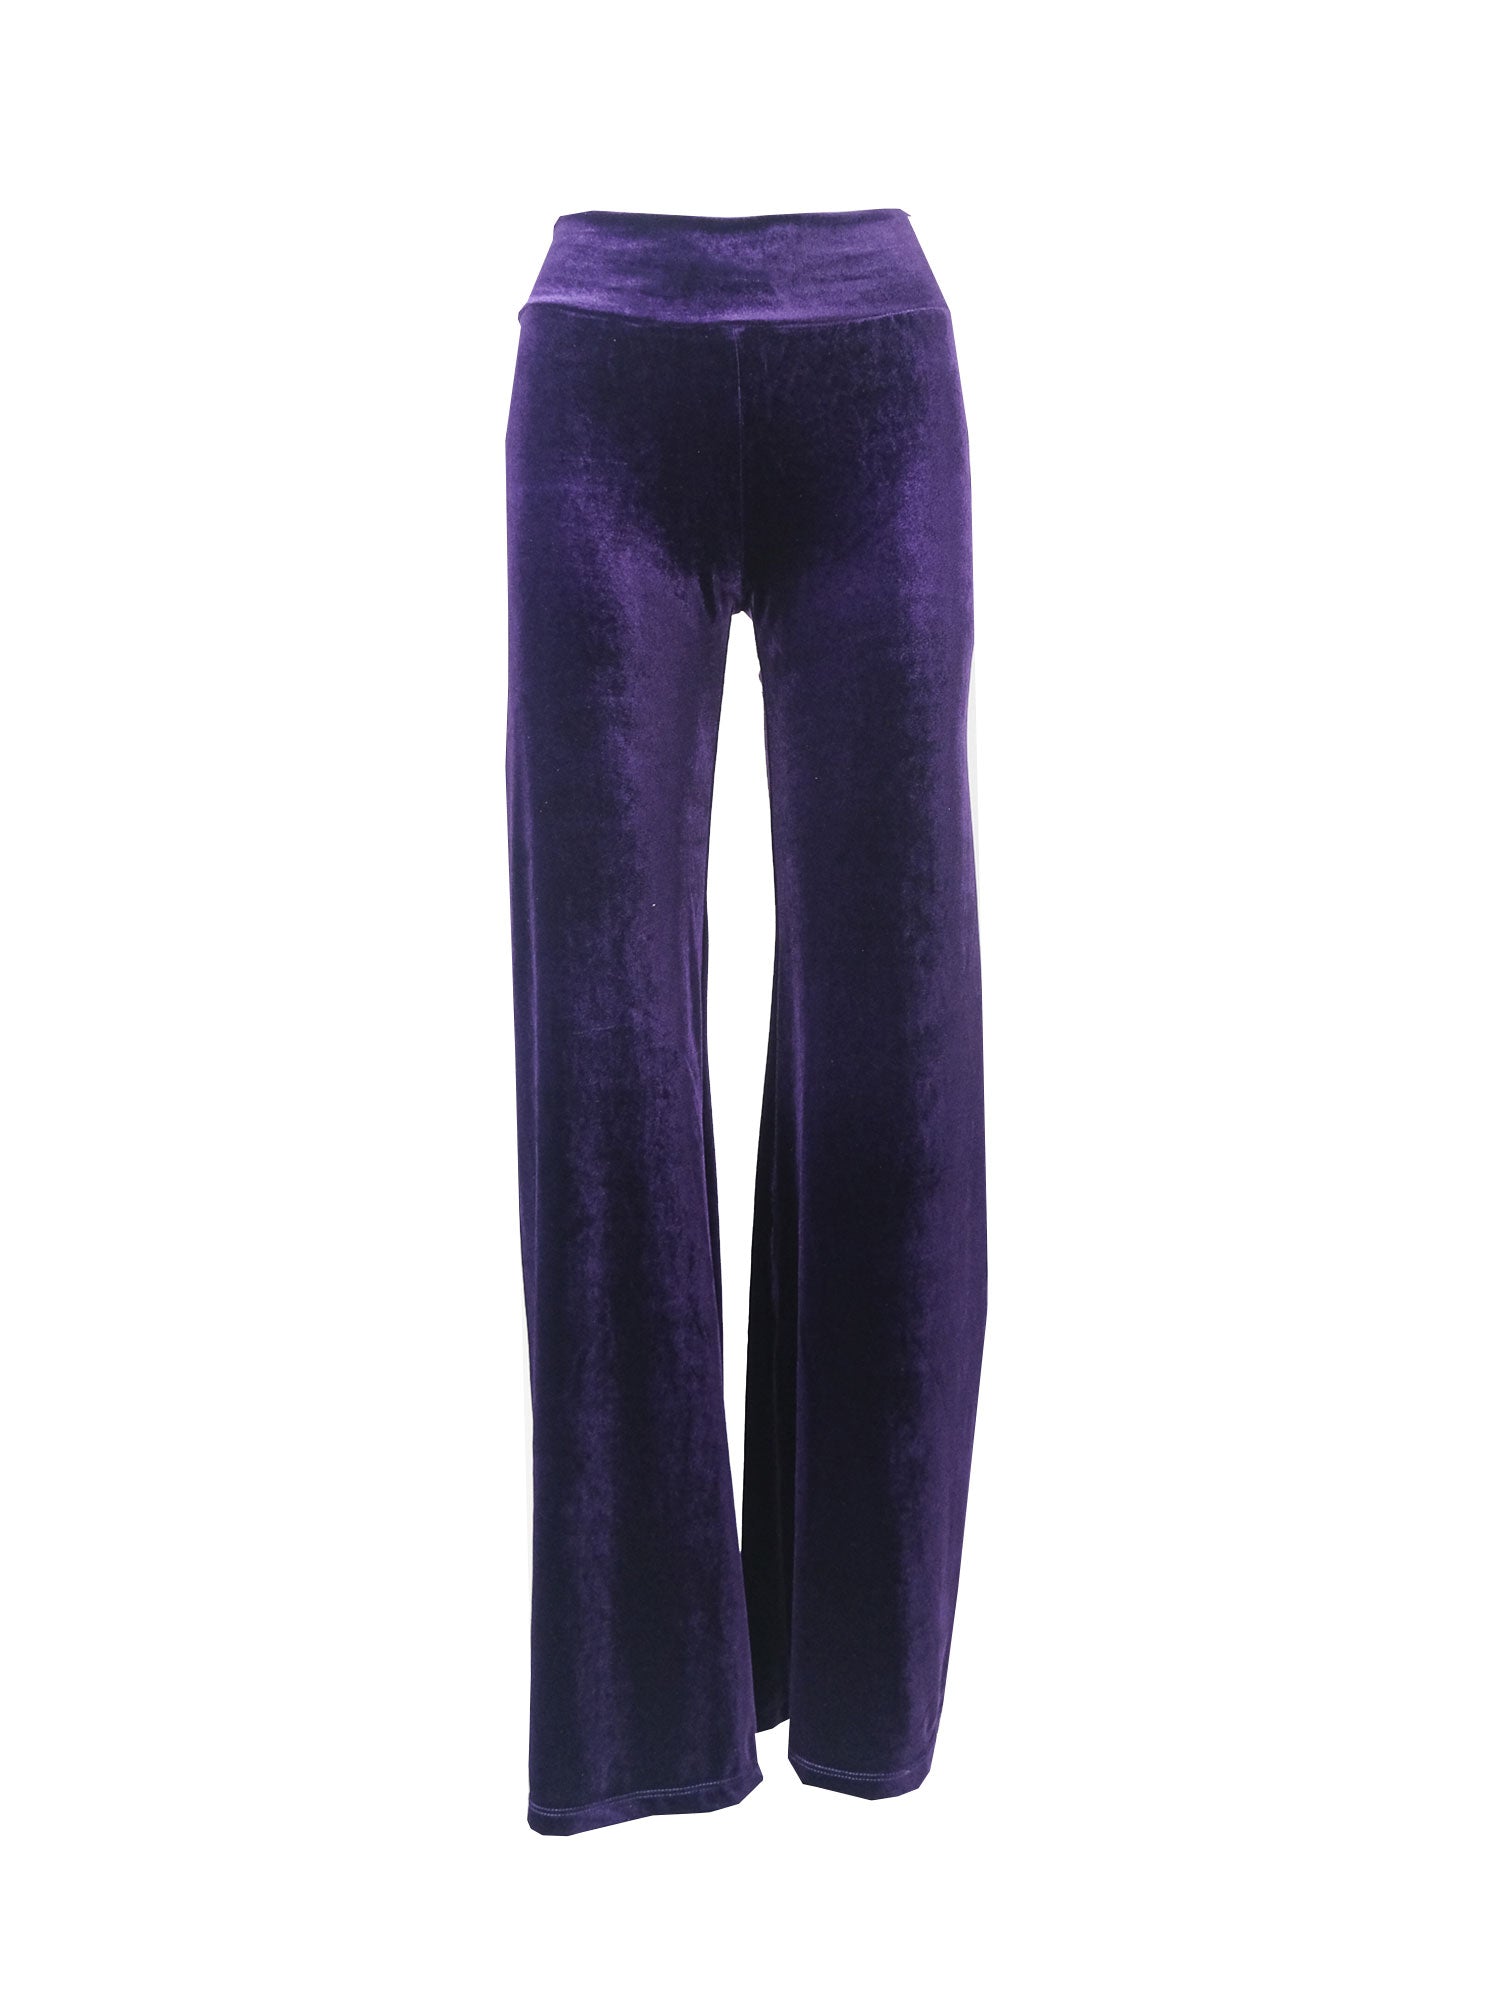 MIMI - purple chenille palazzo pants